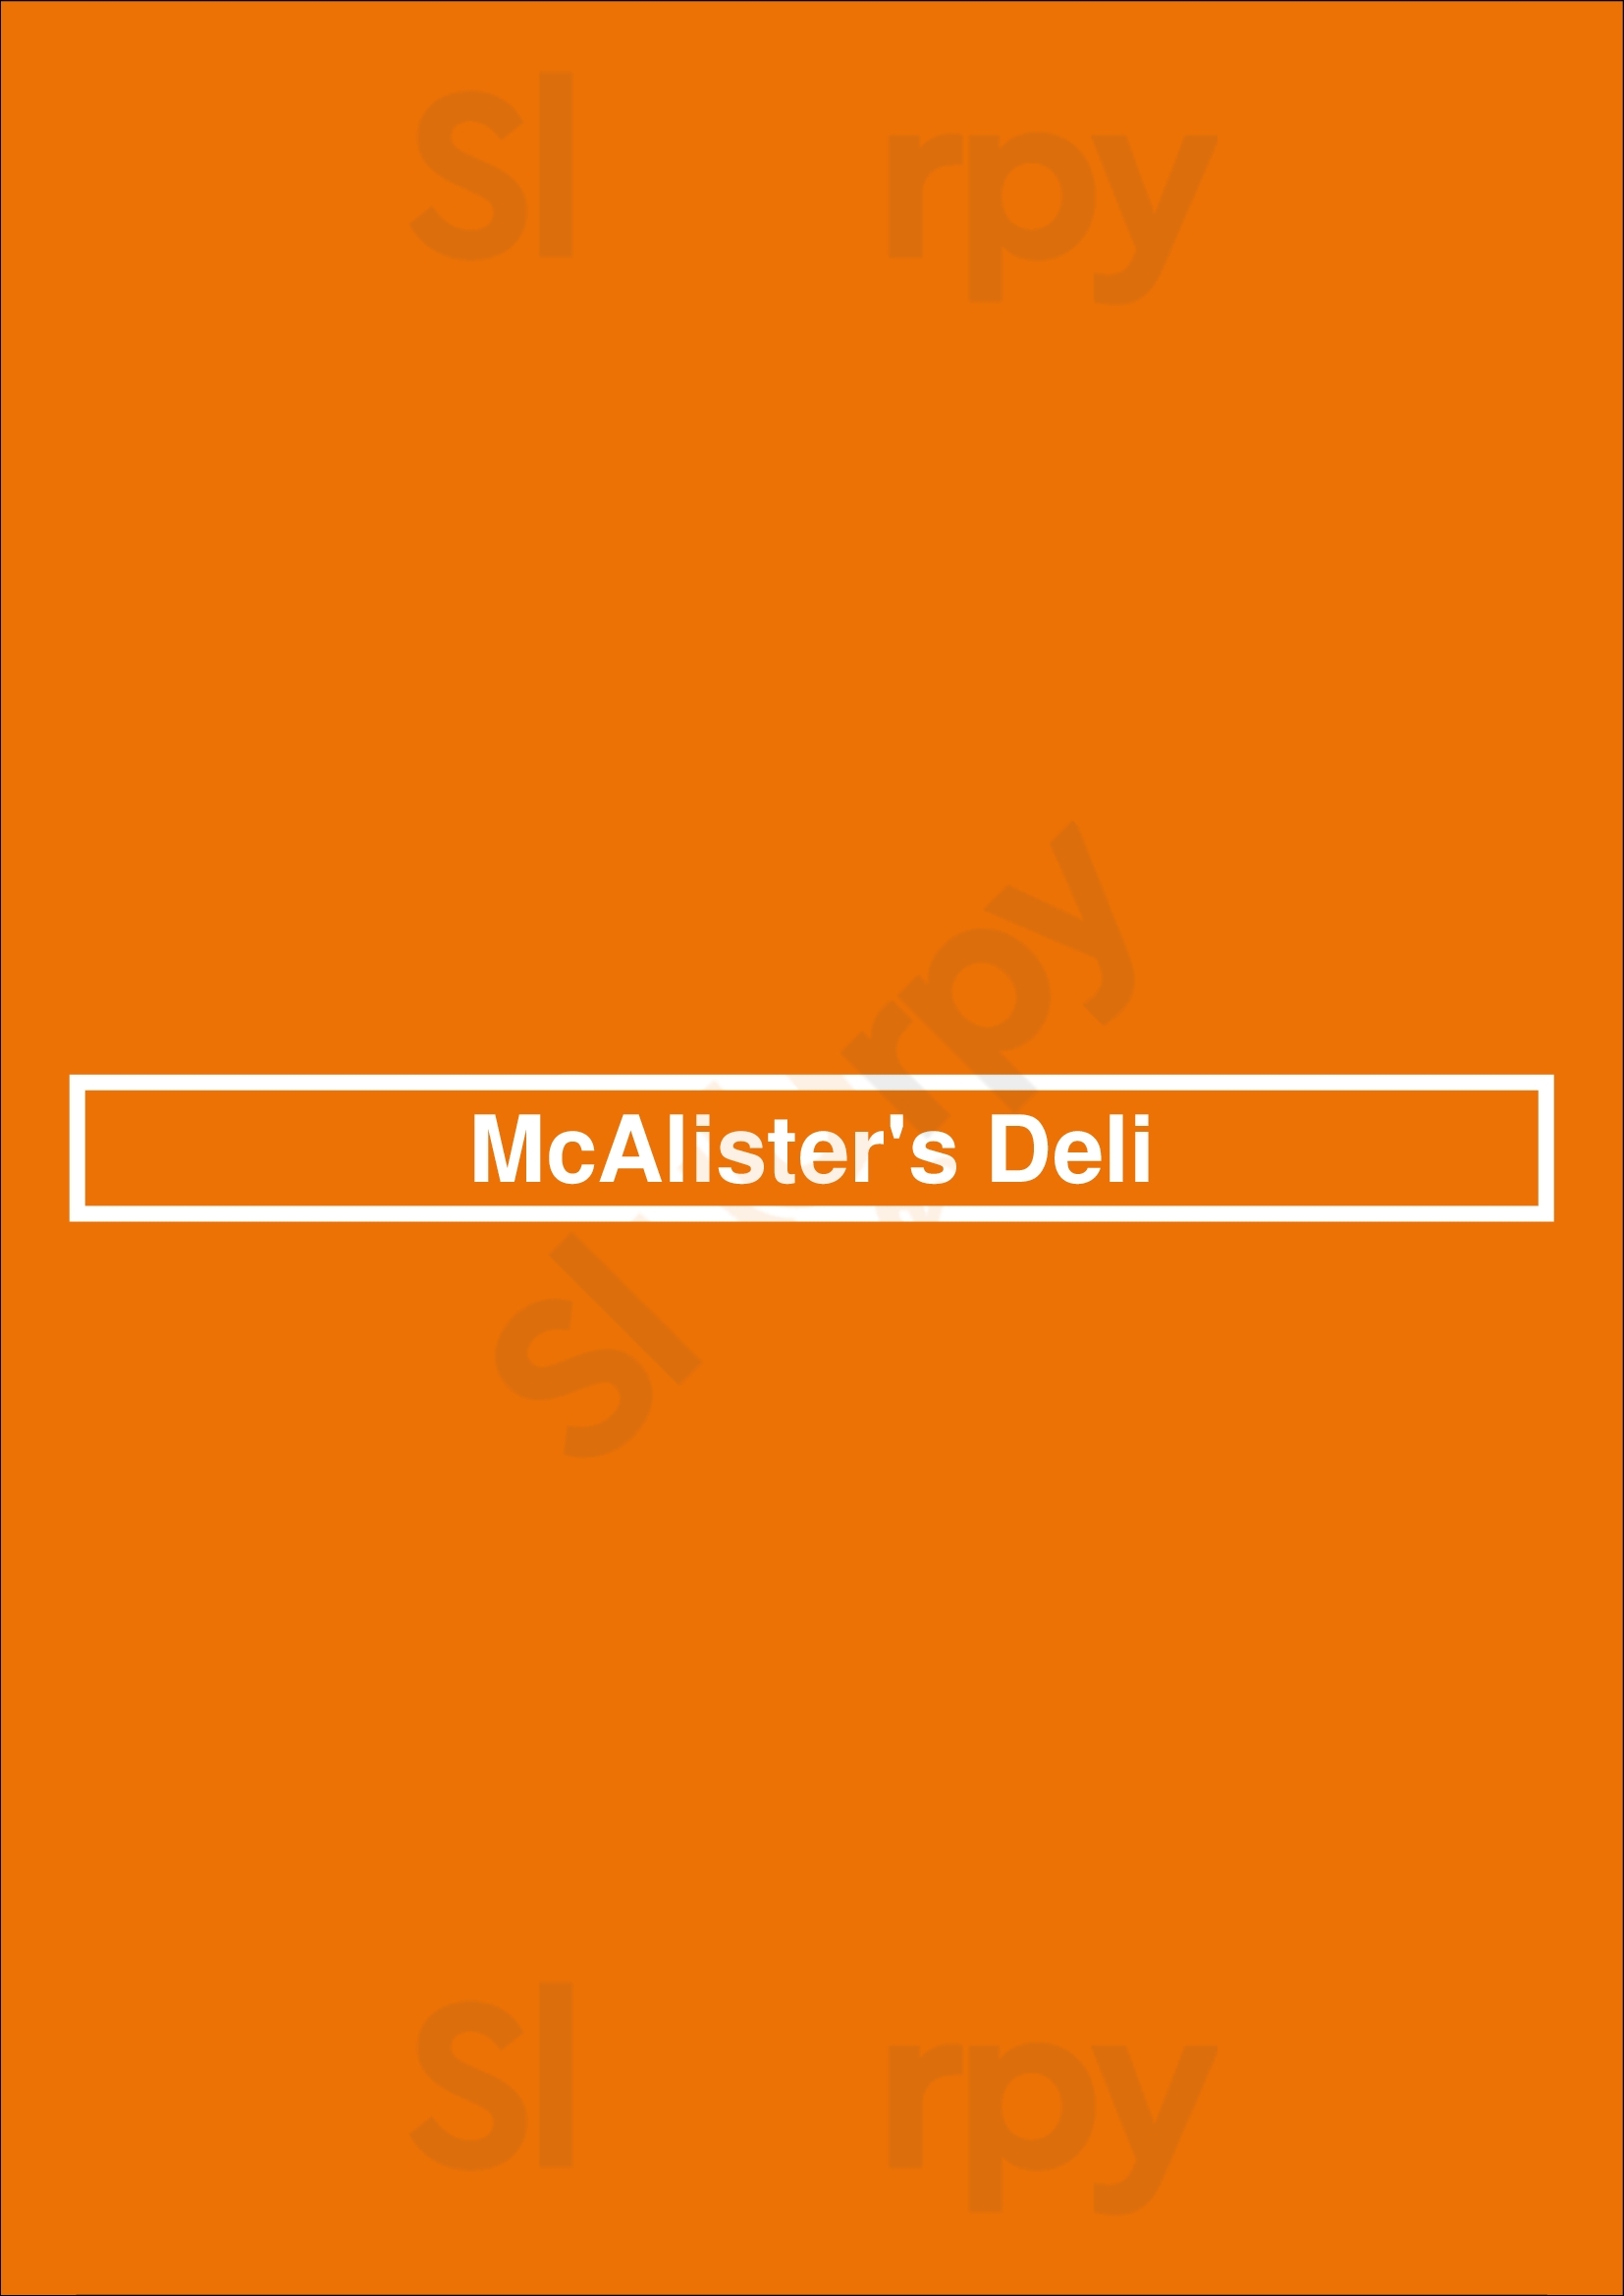 Mcalister's Deli Jackson Menu - 1